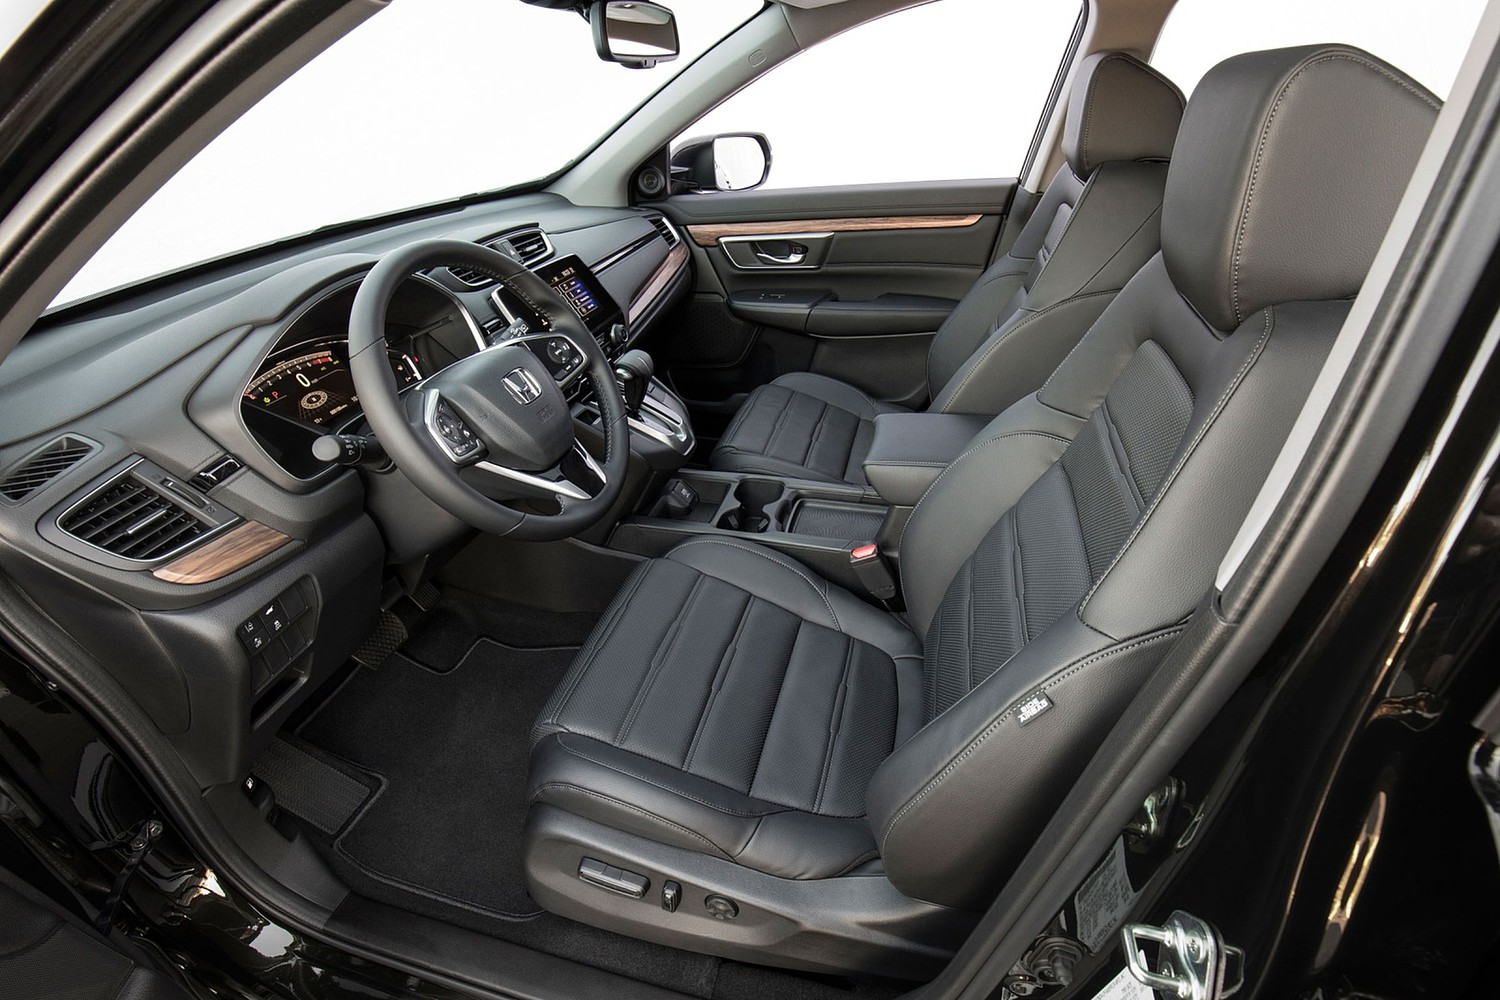 Honda CR-V Touring 4dr SUV Interior Shown (2017 model year shown)